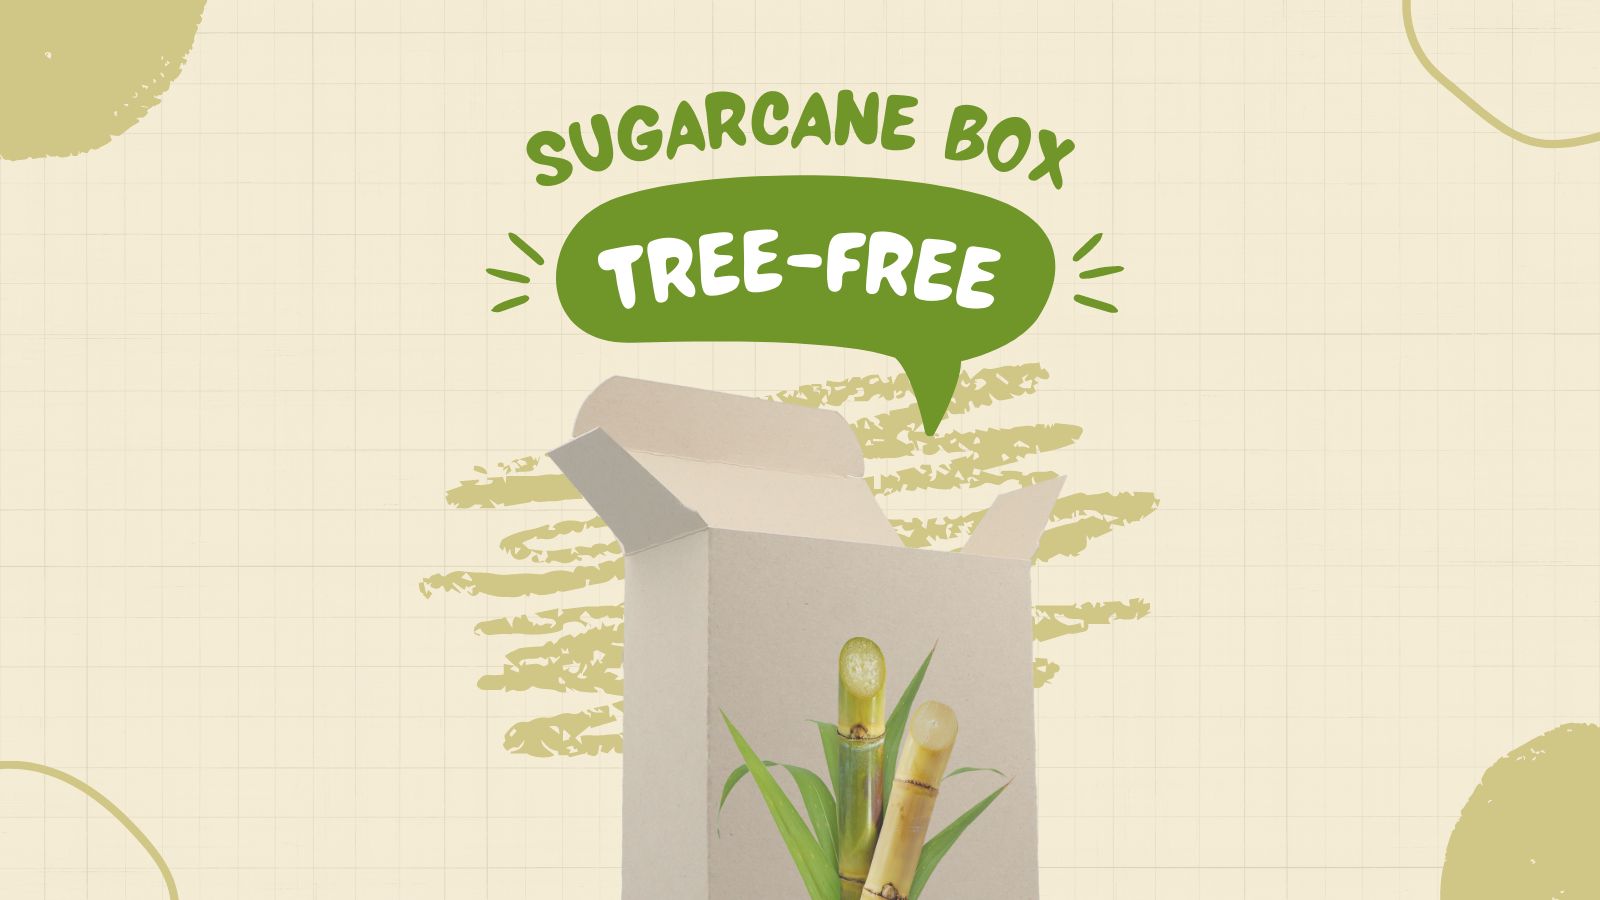 Tree-free cardboard made from bagasse (sugarcane waste)